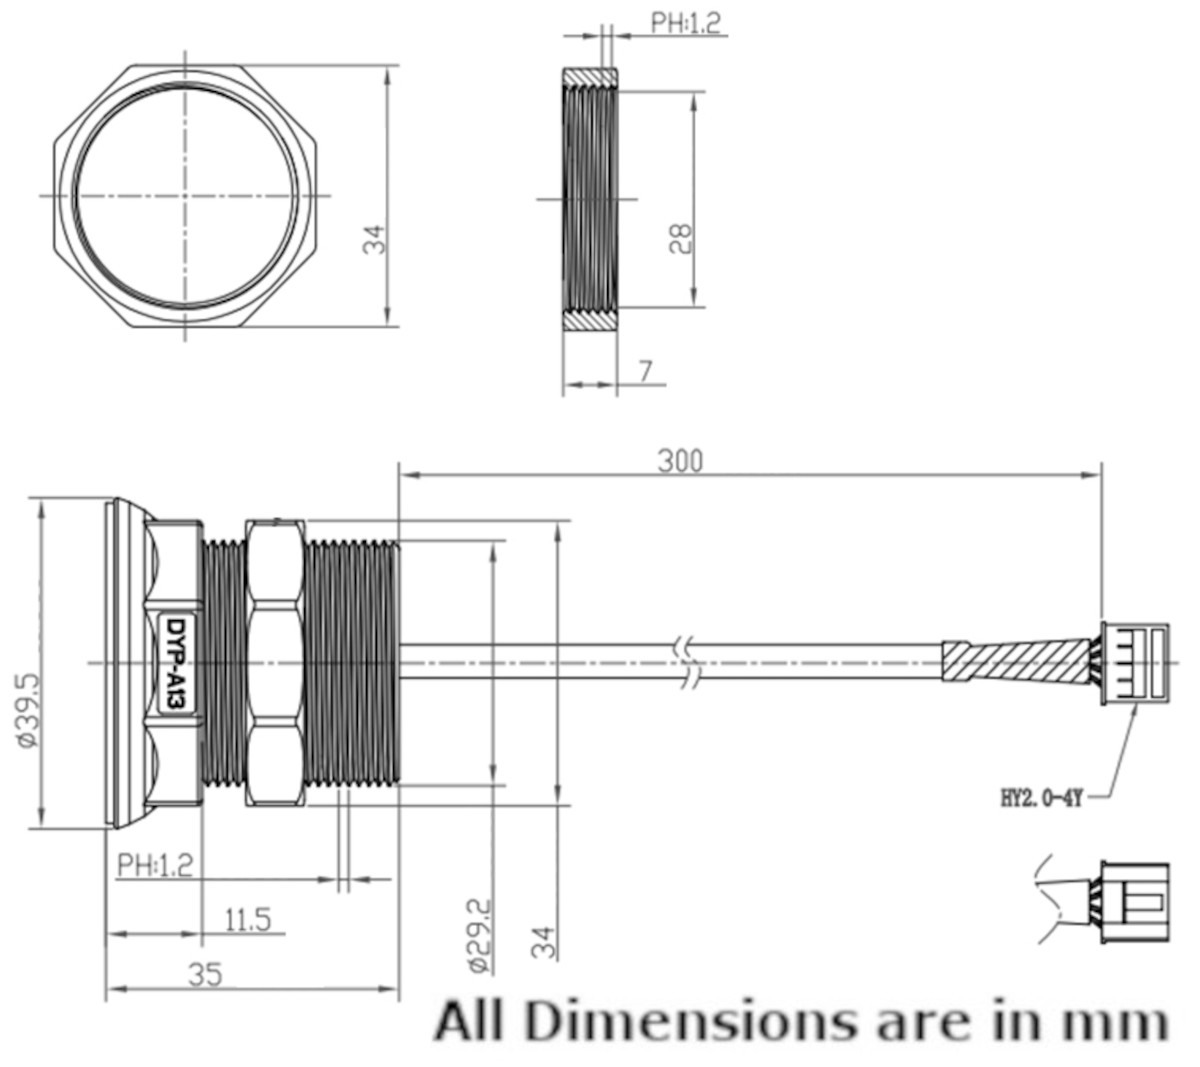 PB-A13 Ultrasonic Distance Sensor Dimensions